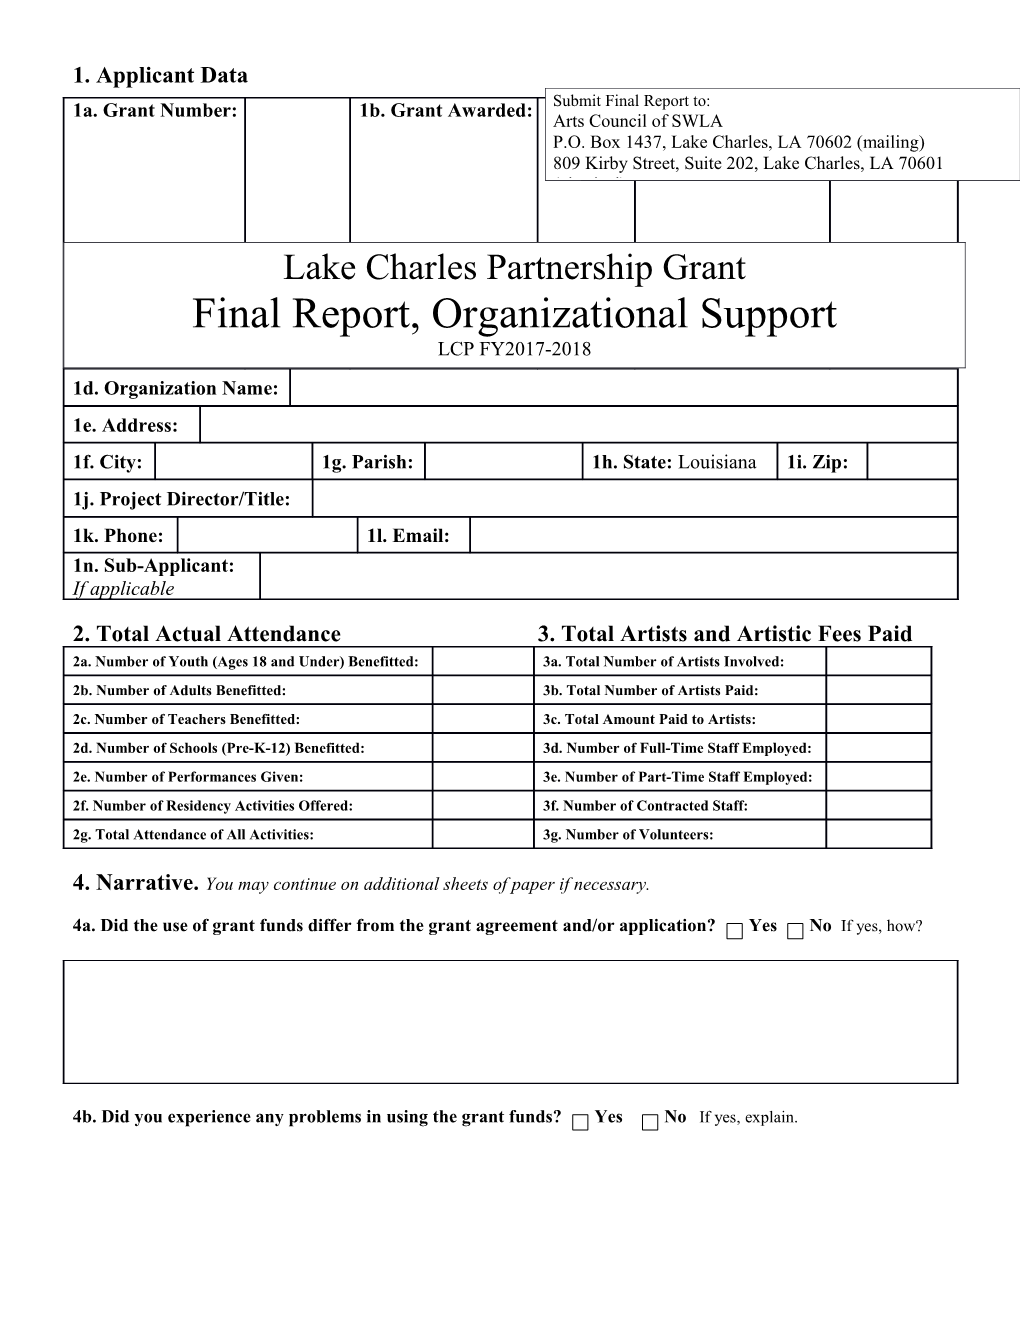 DAF Program - Project Assistance Final Report